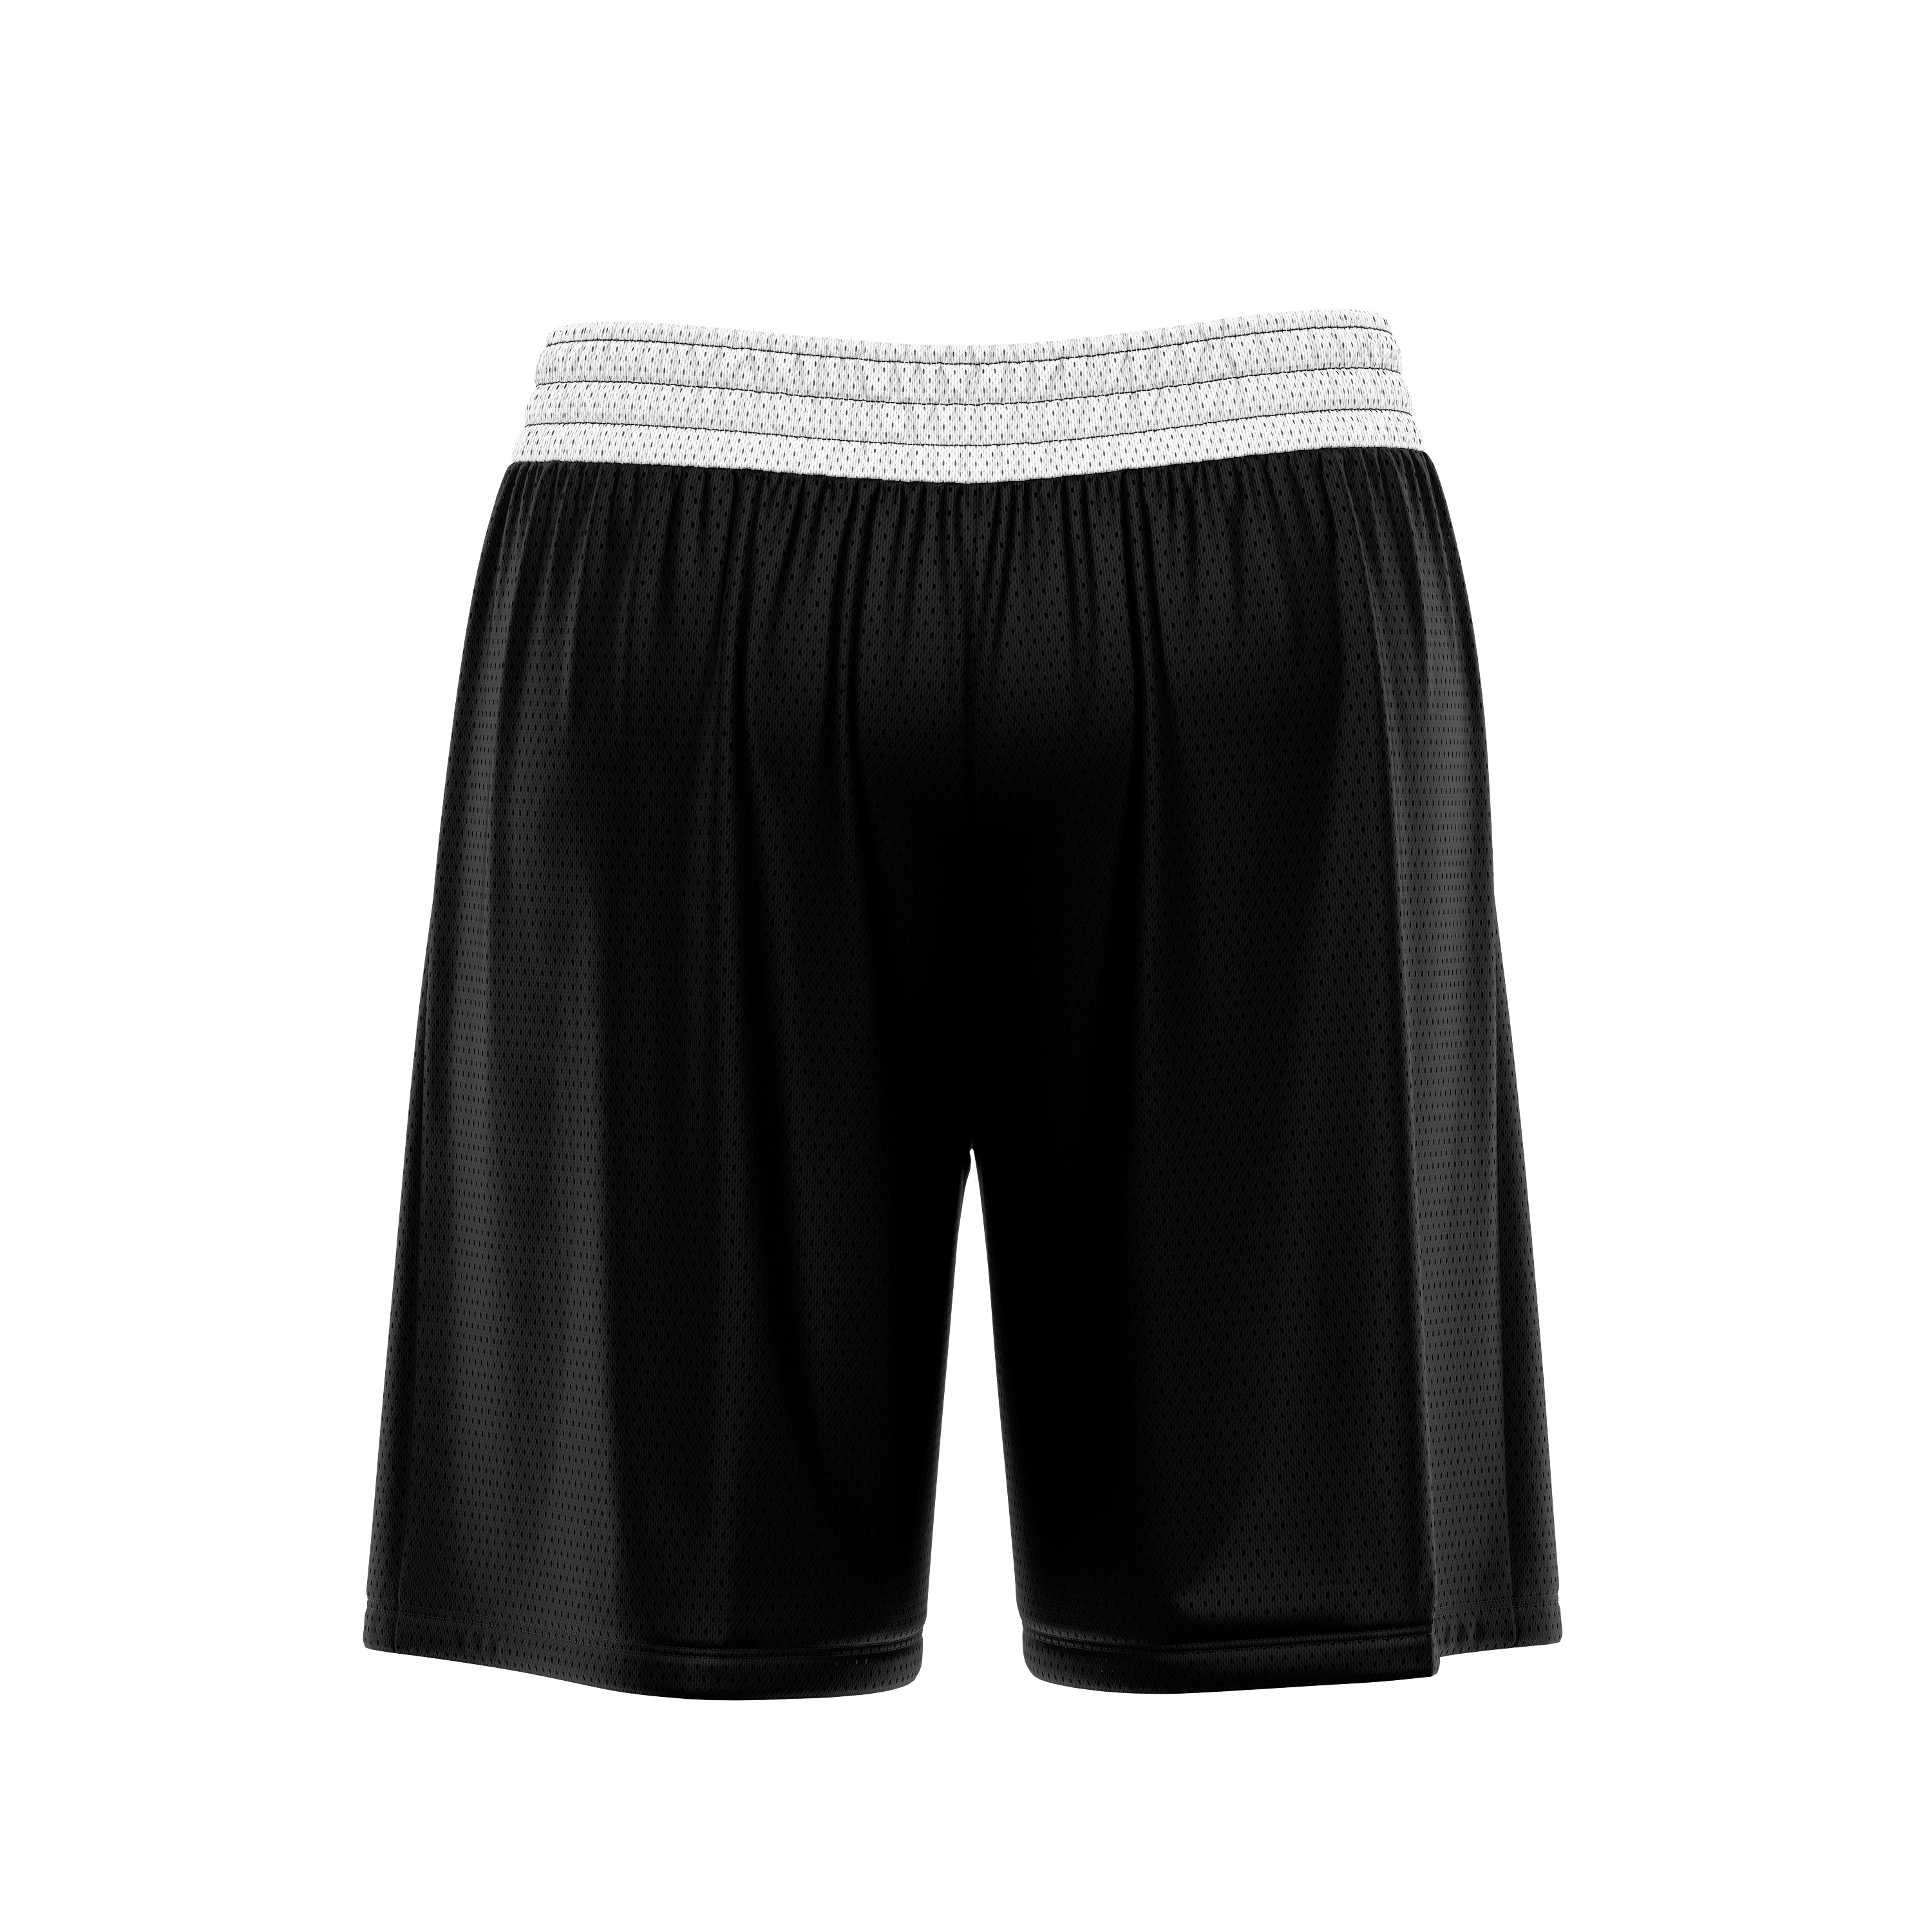 Centerburg Trojan Soccer |  Shorts